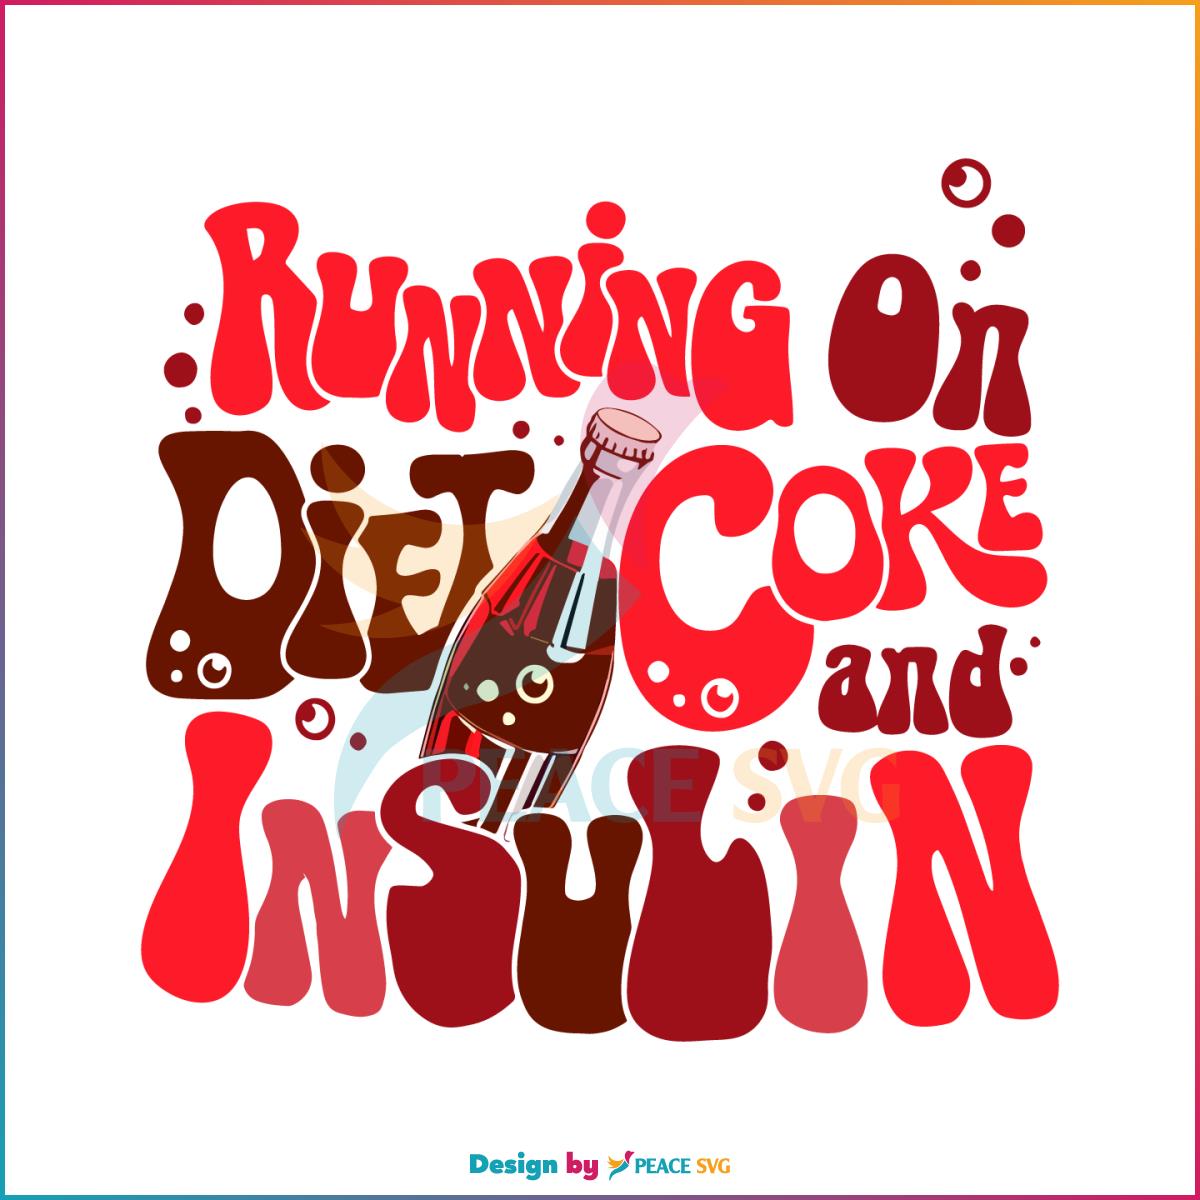 running-on-diet-coke-and-insulin-diabetes-awareness-svg-file